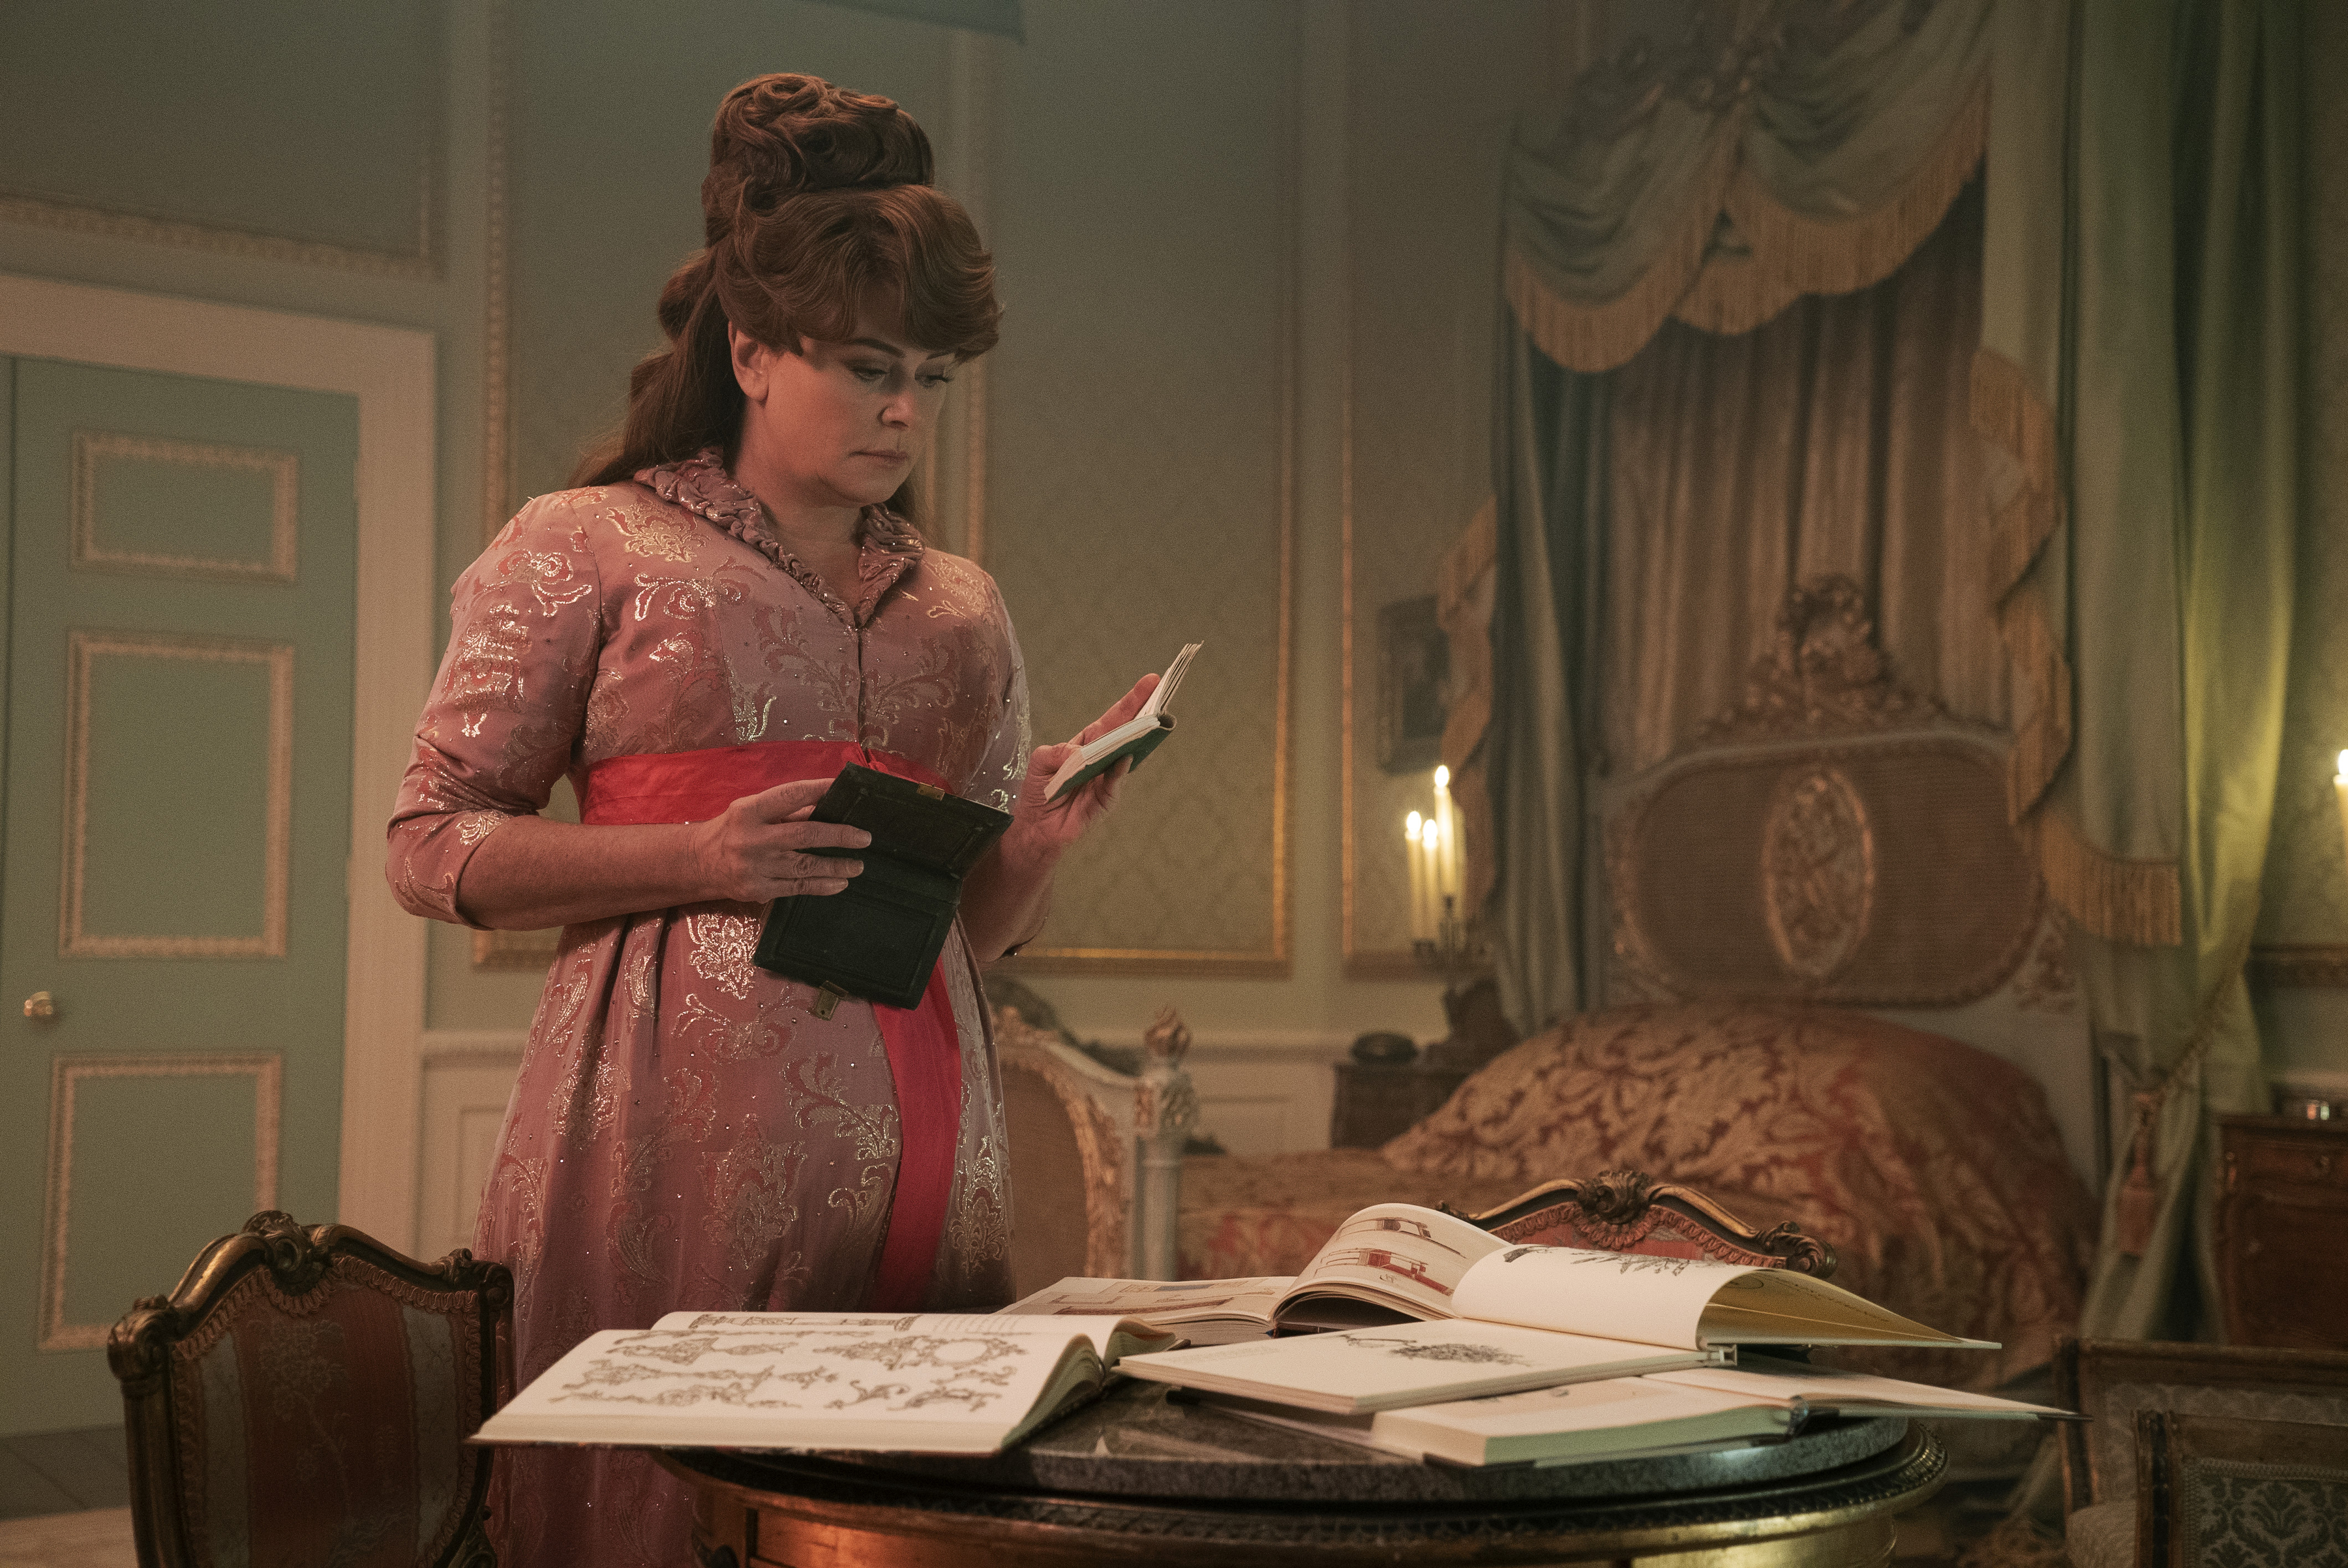 Lady Featherington inspecting the books in a still from season 2 of Bridgerton